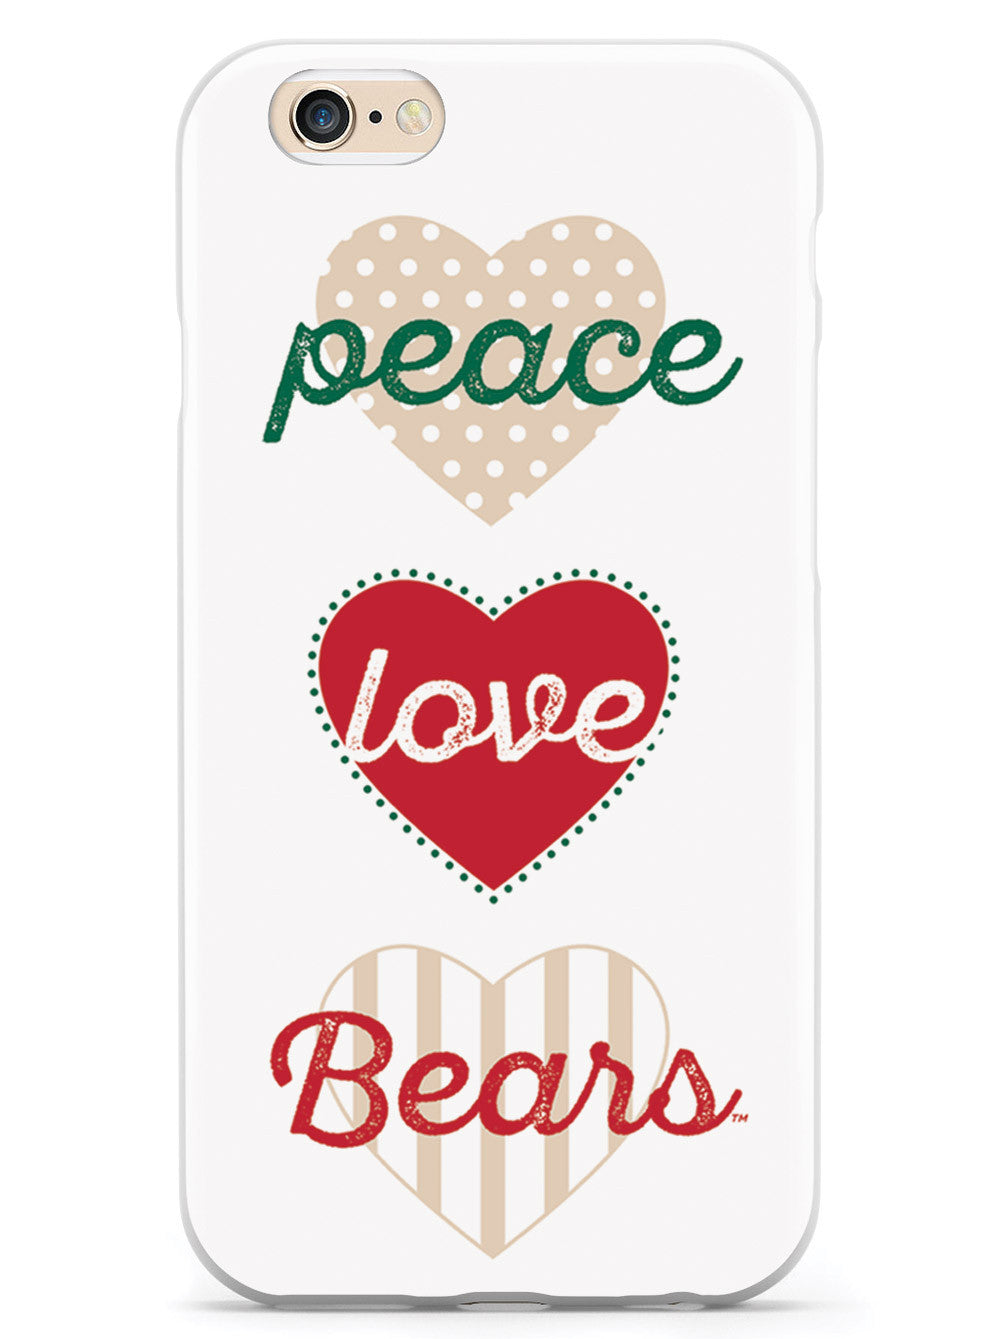 Peace, Love, Bears - Washington University, St Louis Case